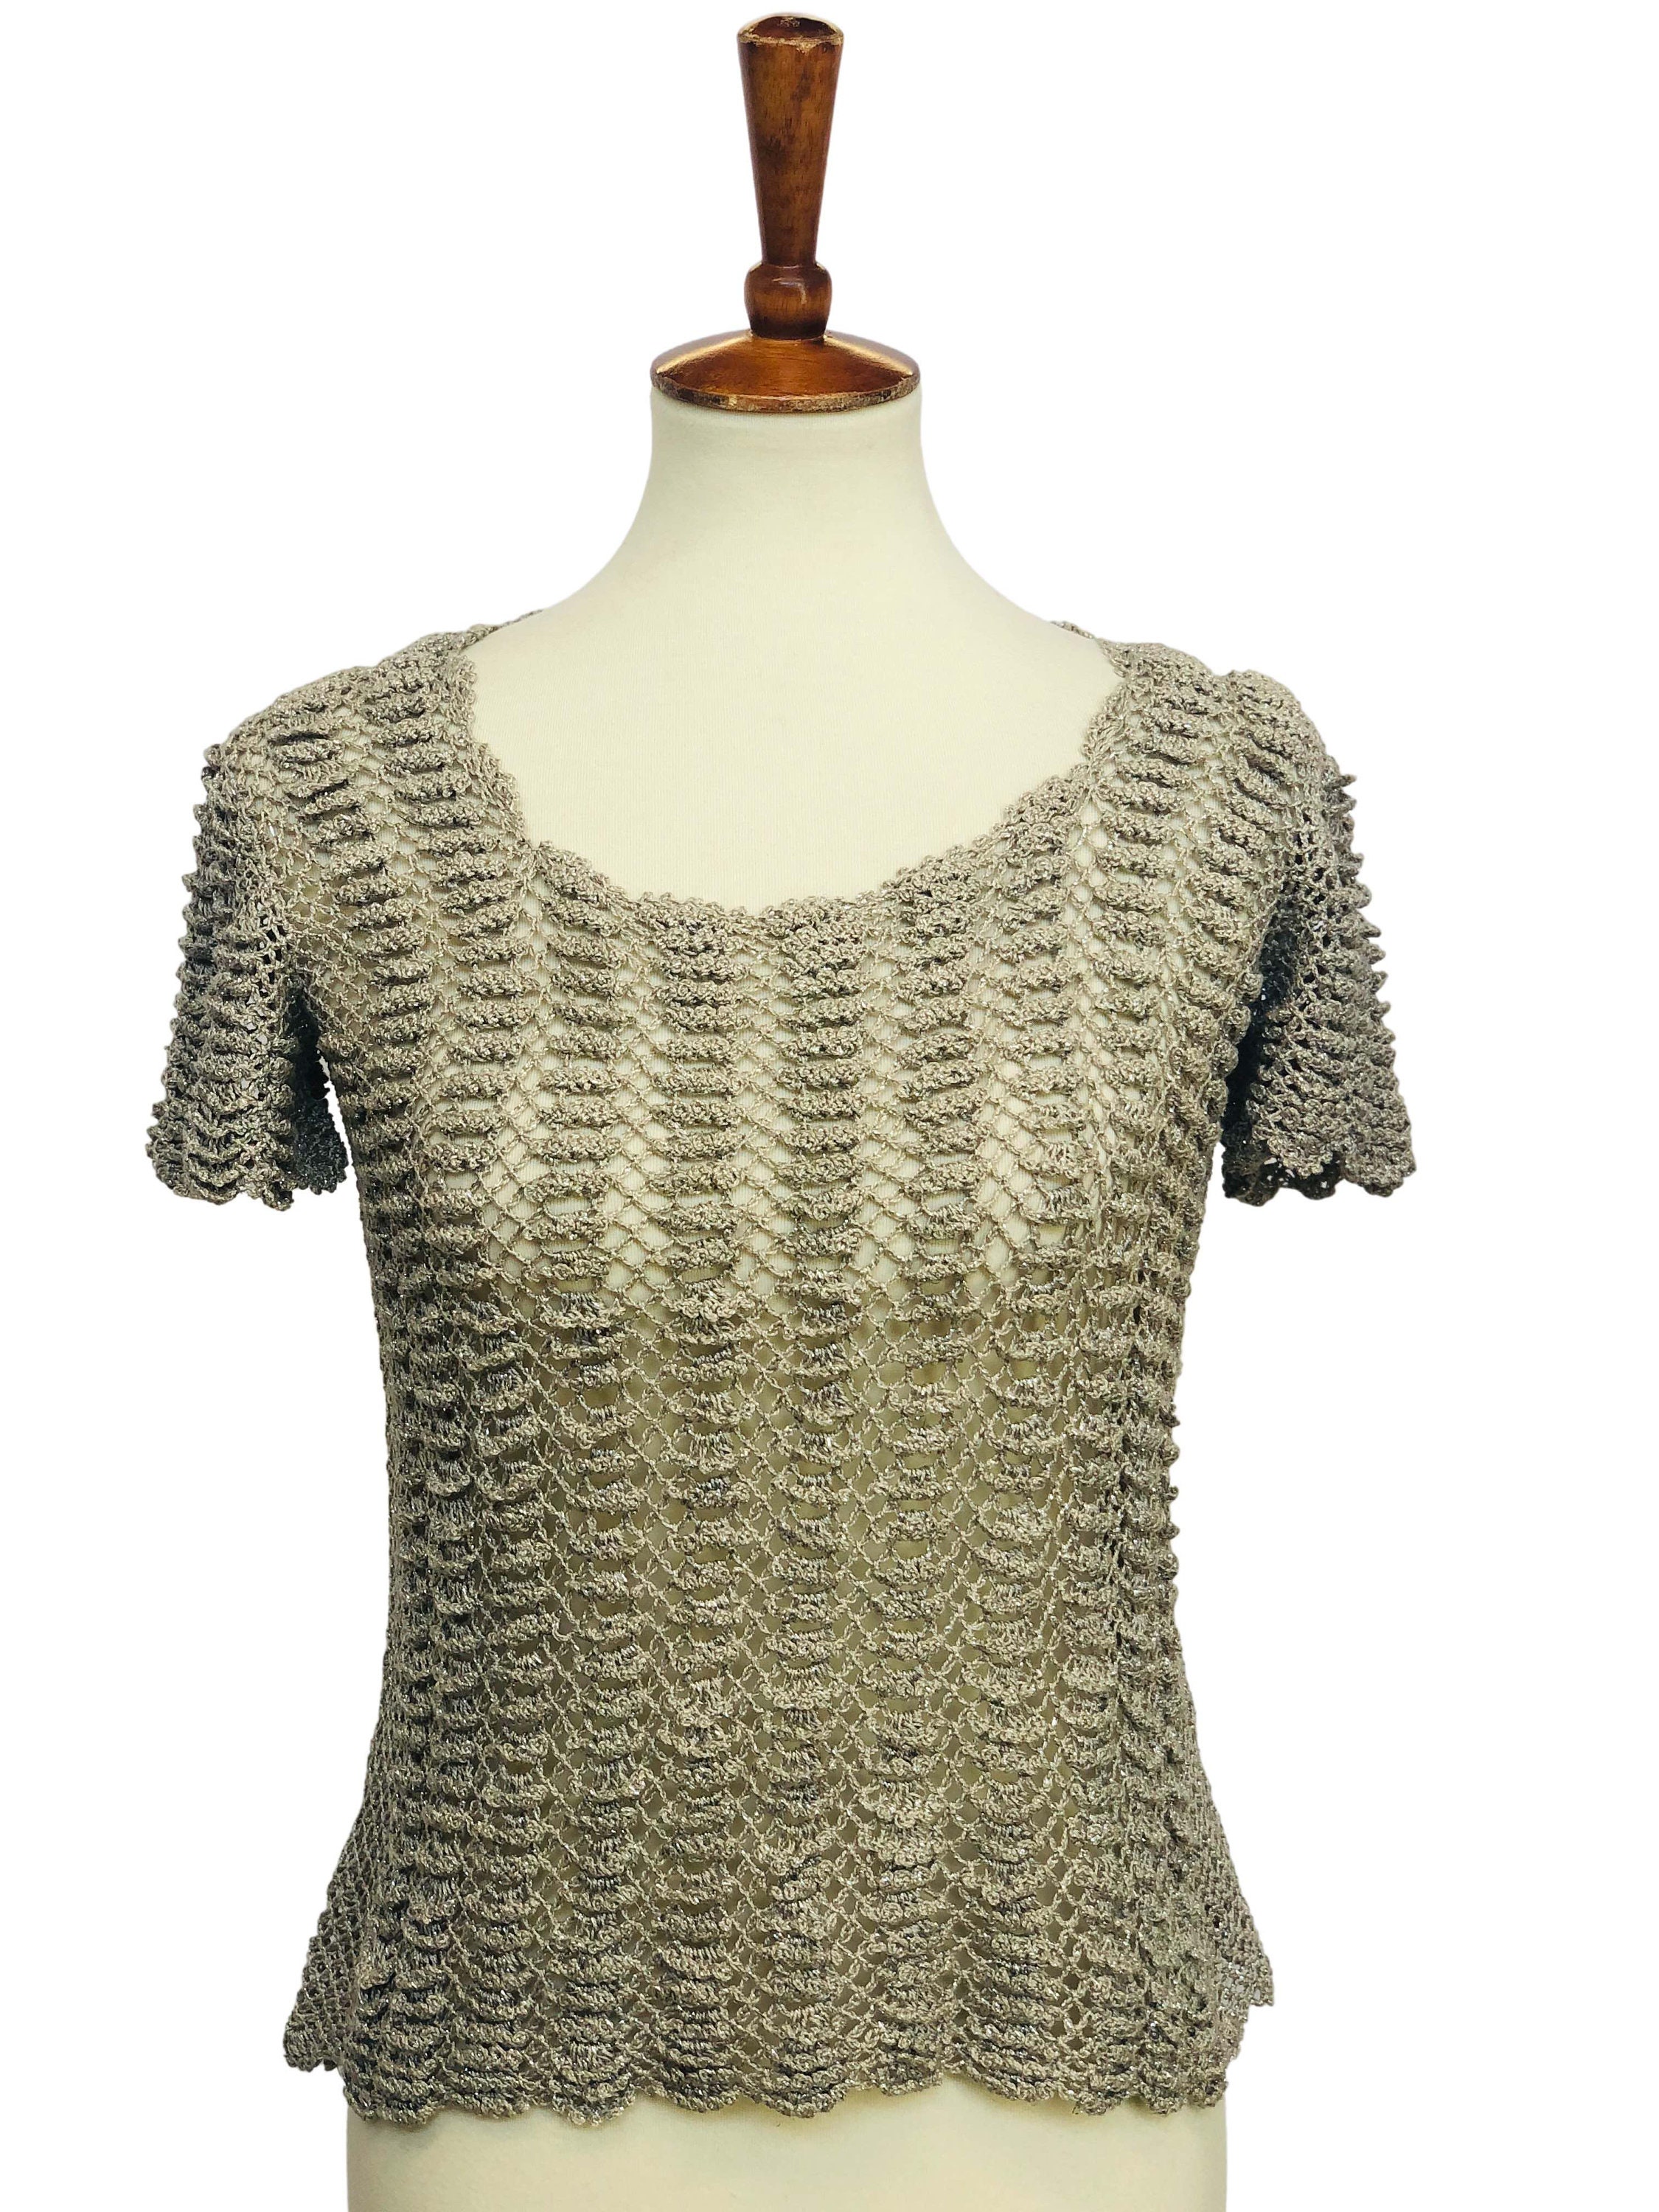 1960's Silver & Grey Scalloped Crochet Knit Top | Etsy